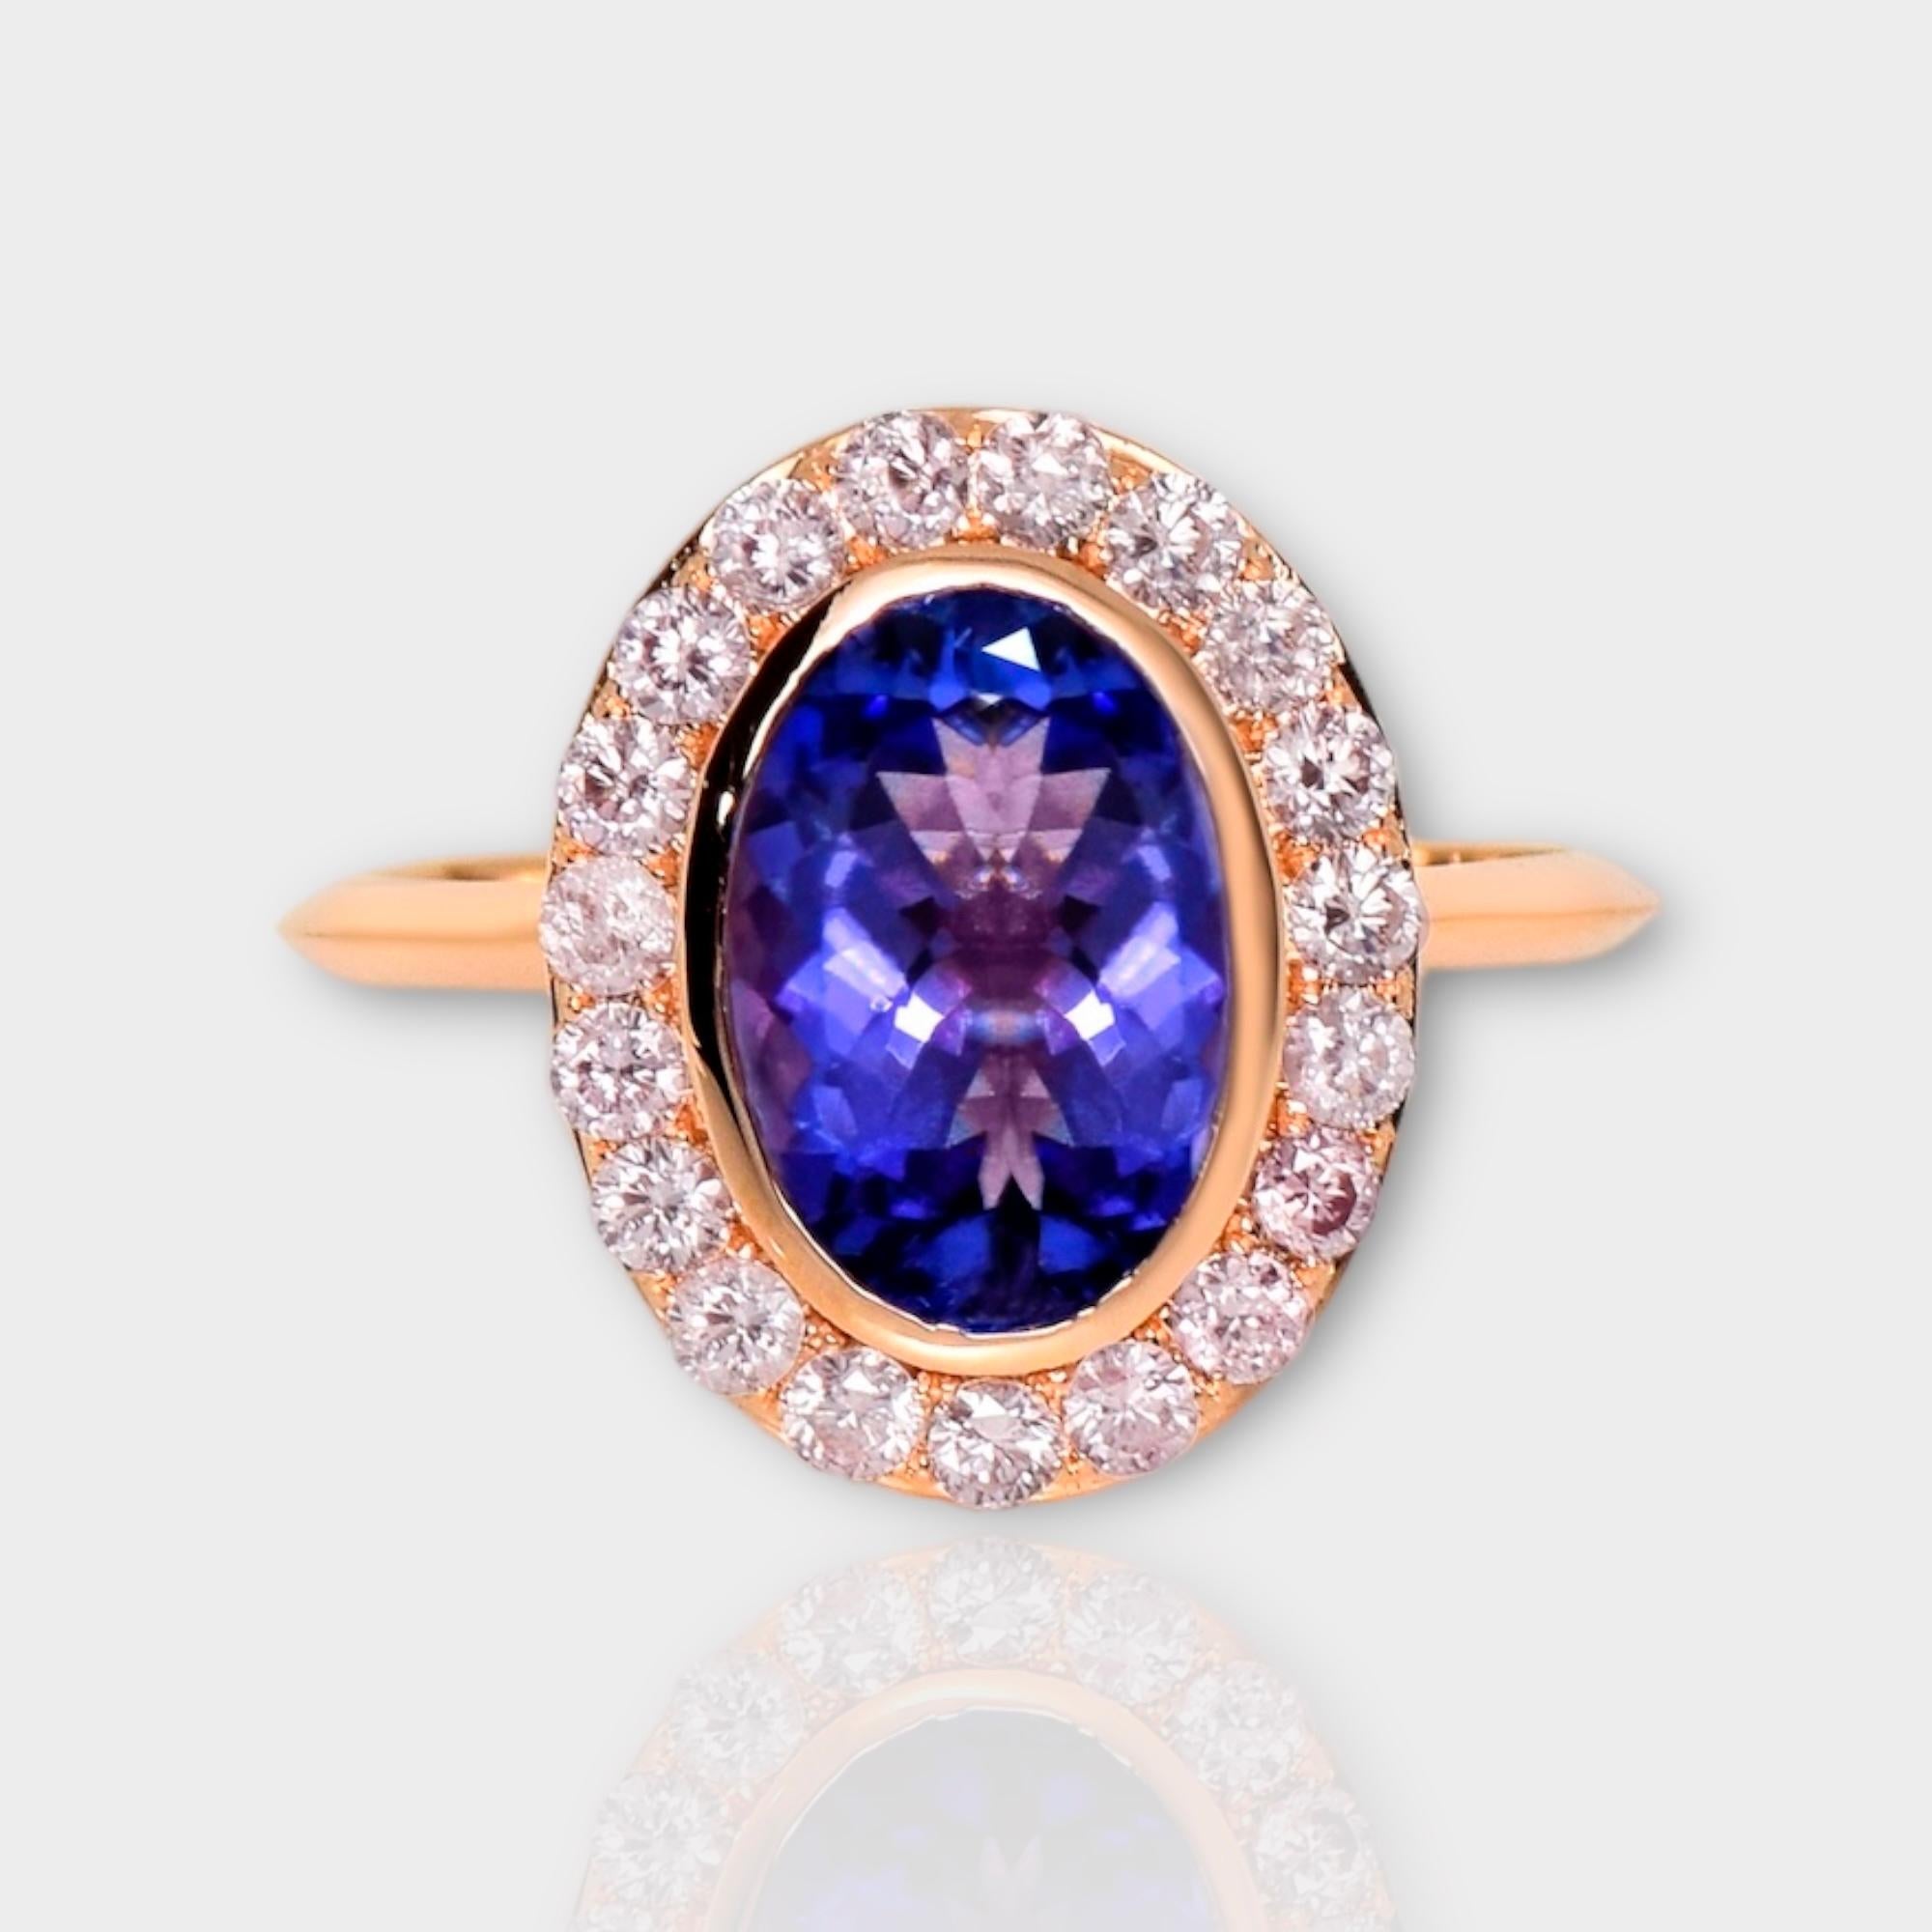 *IGI 14K 2.15 ct Tanzanite&Pink Diamond Antique Art Deco Style Engagement Ring*
The natural intense bluish violet tanzanite, weighing 2.15 ct, is the center stone surrounded by natural pink diamonds weighing 0.52 ct on the 14K pink gold halo design